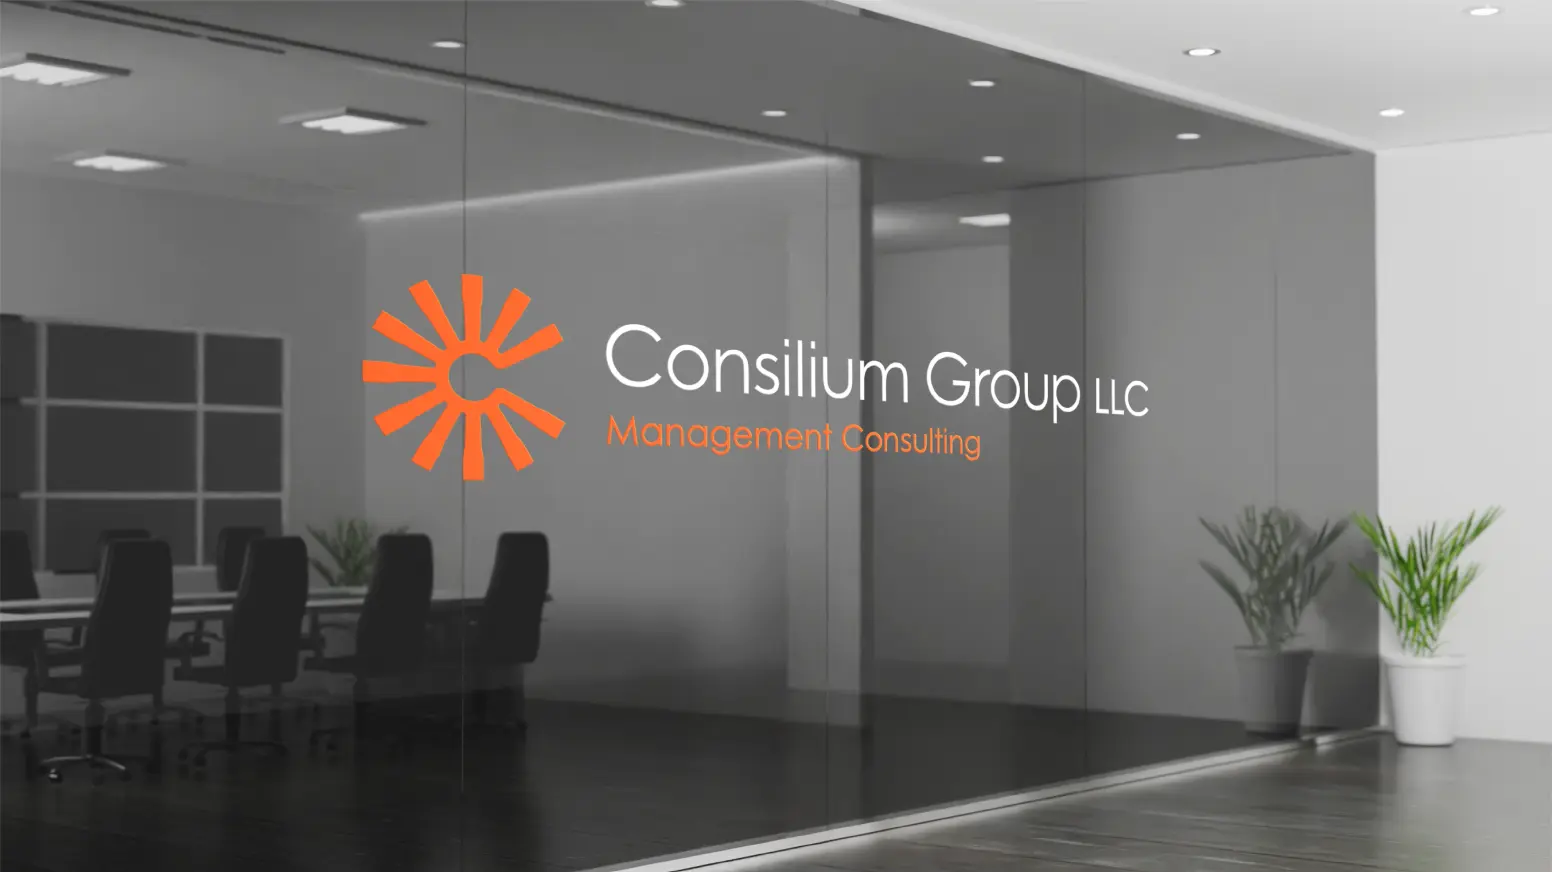 Consilium Group Brand Assets 01